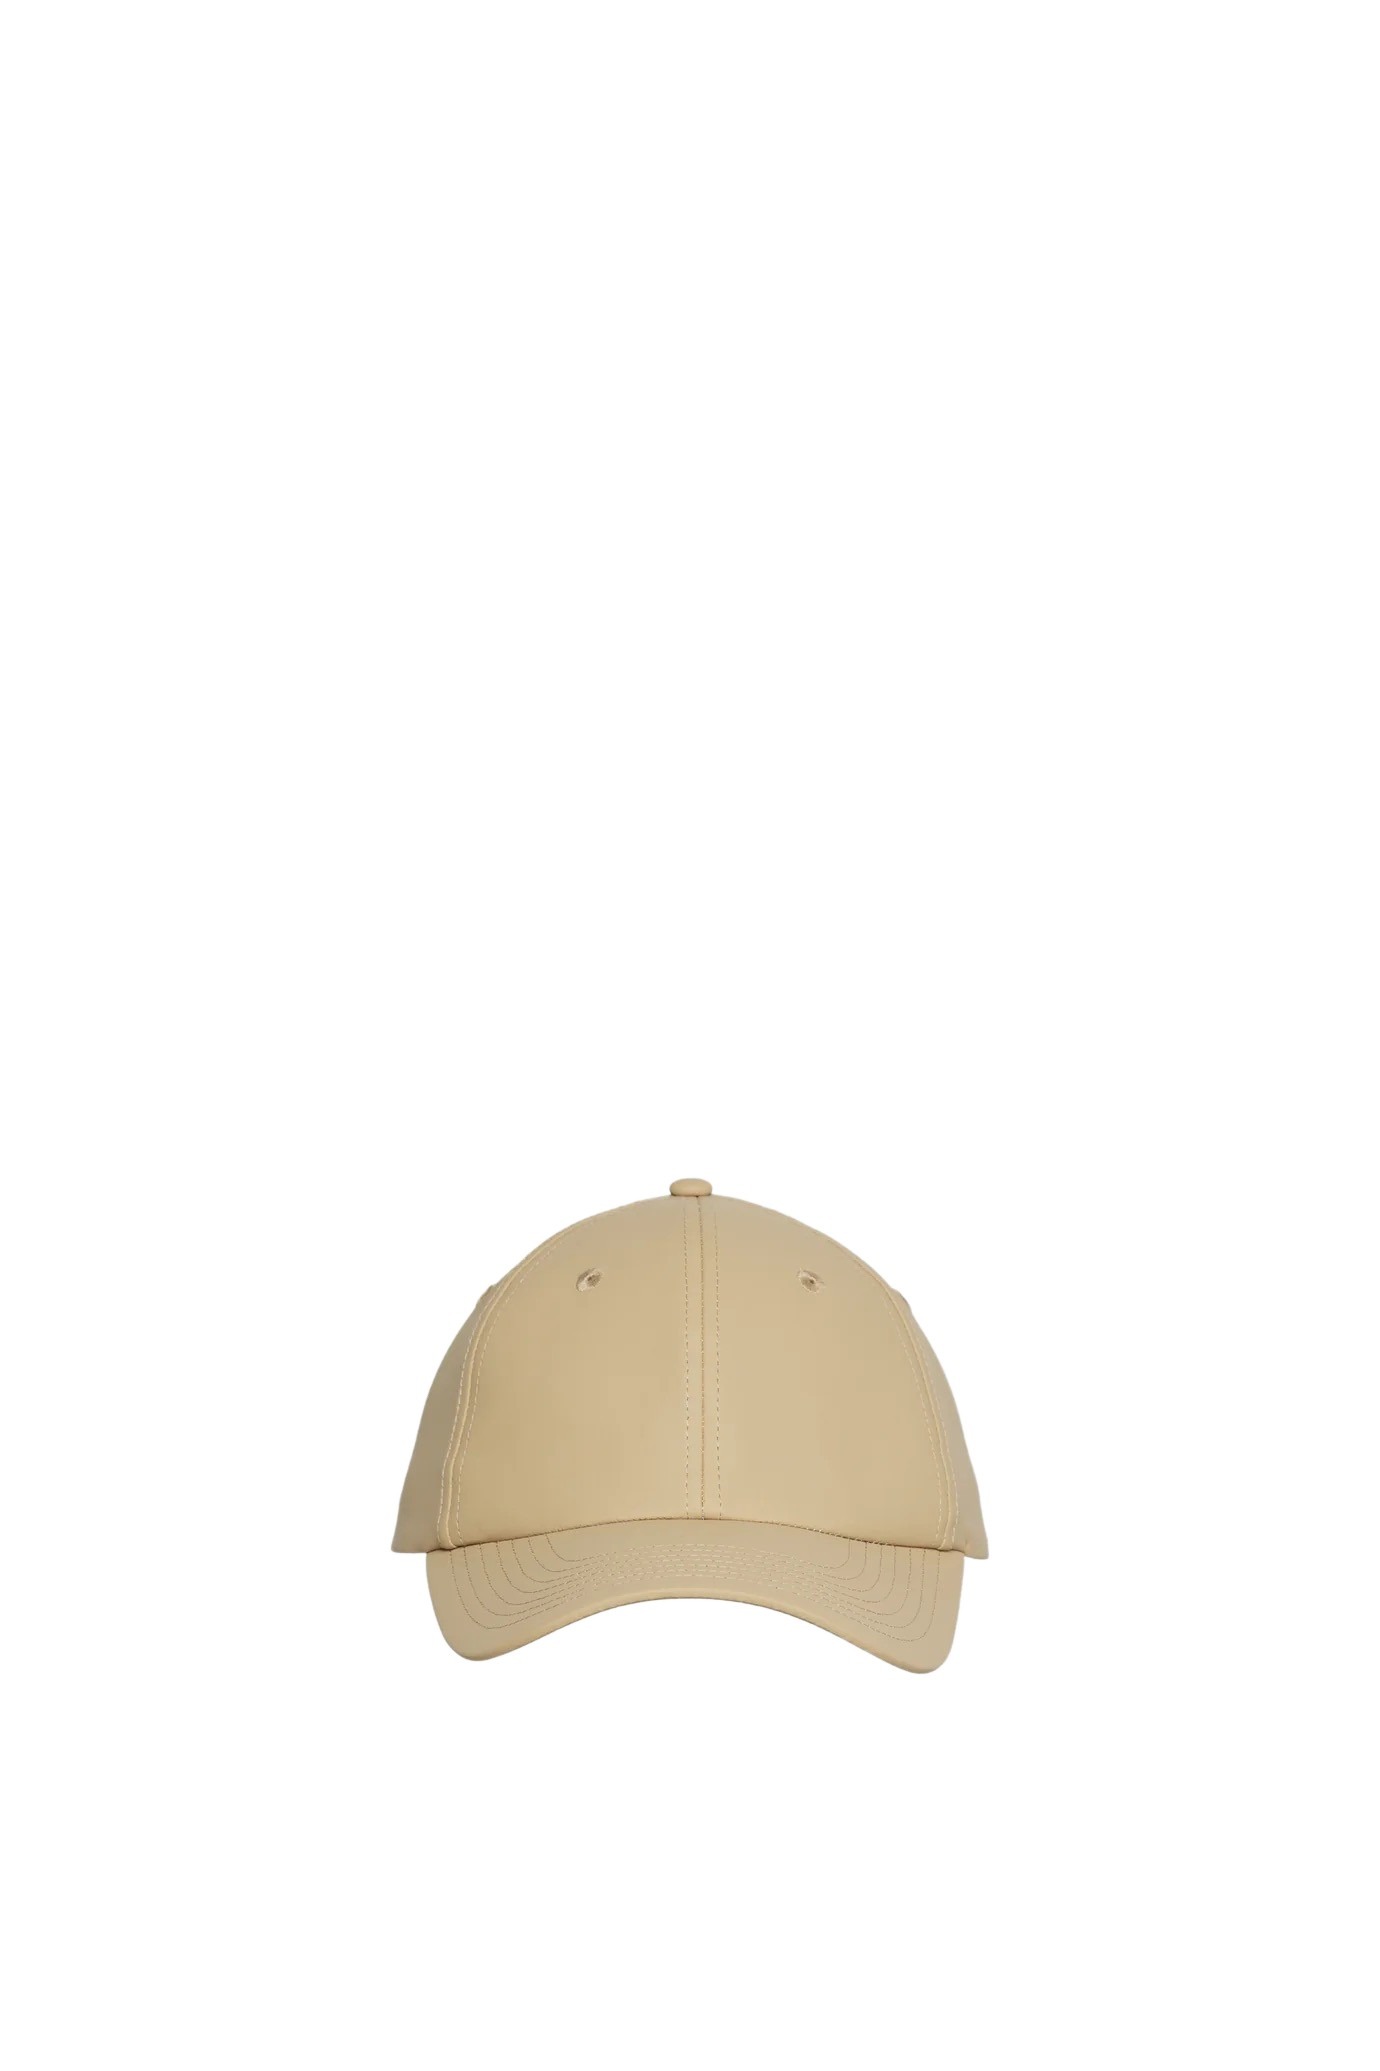 cap-headwear-13600-24_sand-1